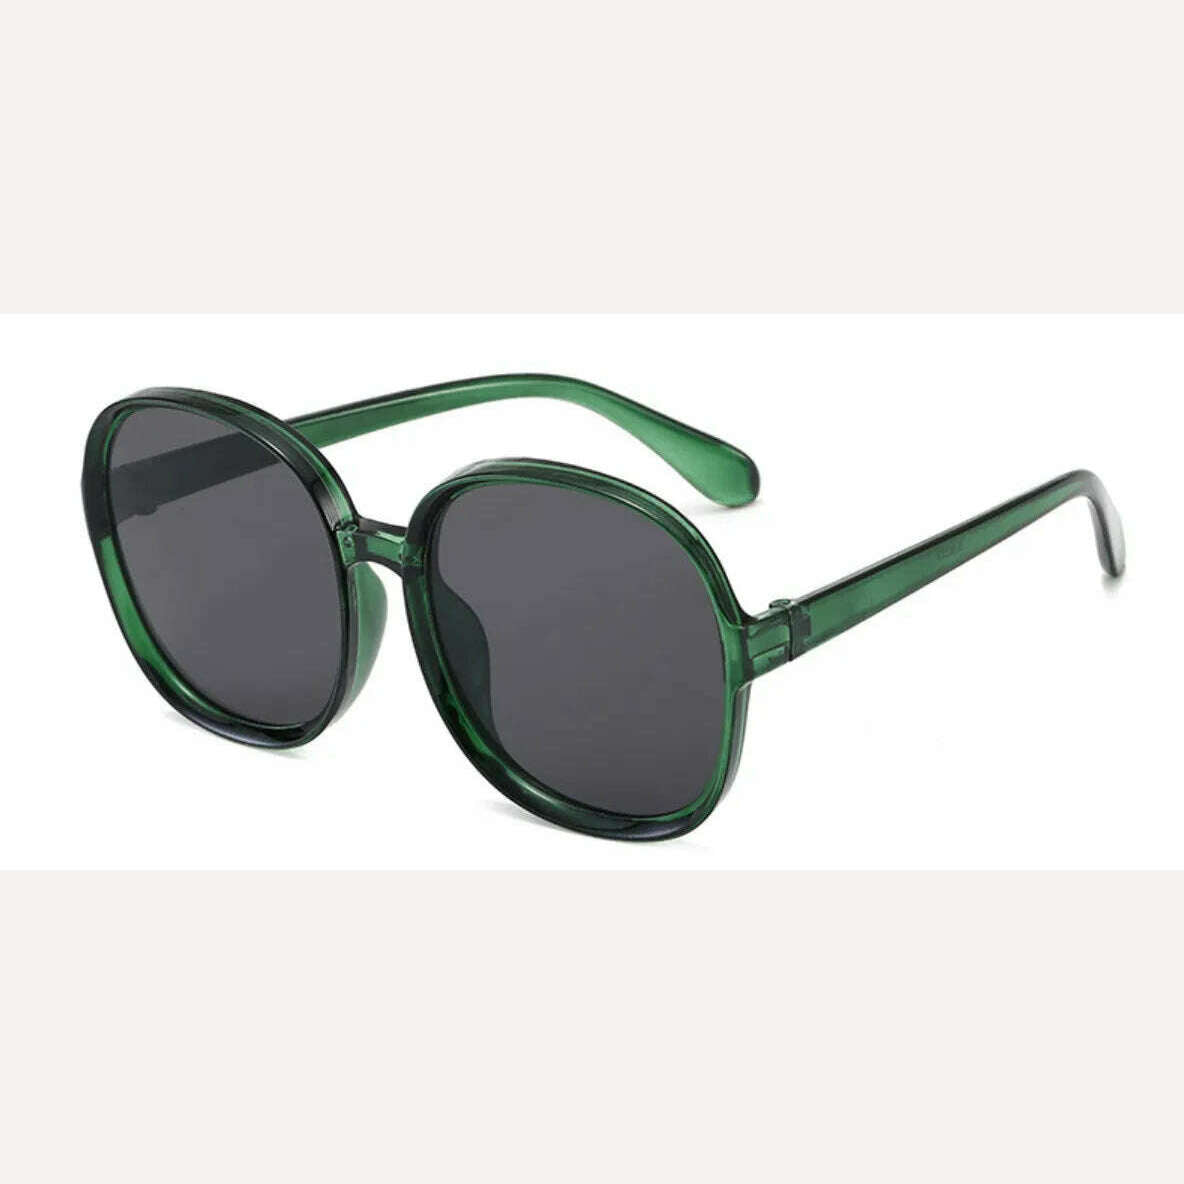 KIMLUD, 2021 Plastic Classic Vintage Woman Sunglasses Oversized Round Frame Luxury Brand Designer Female Glasses Big Shades Oculos, Green Gray, KIMLUD Womens Clothes